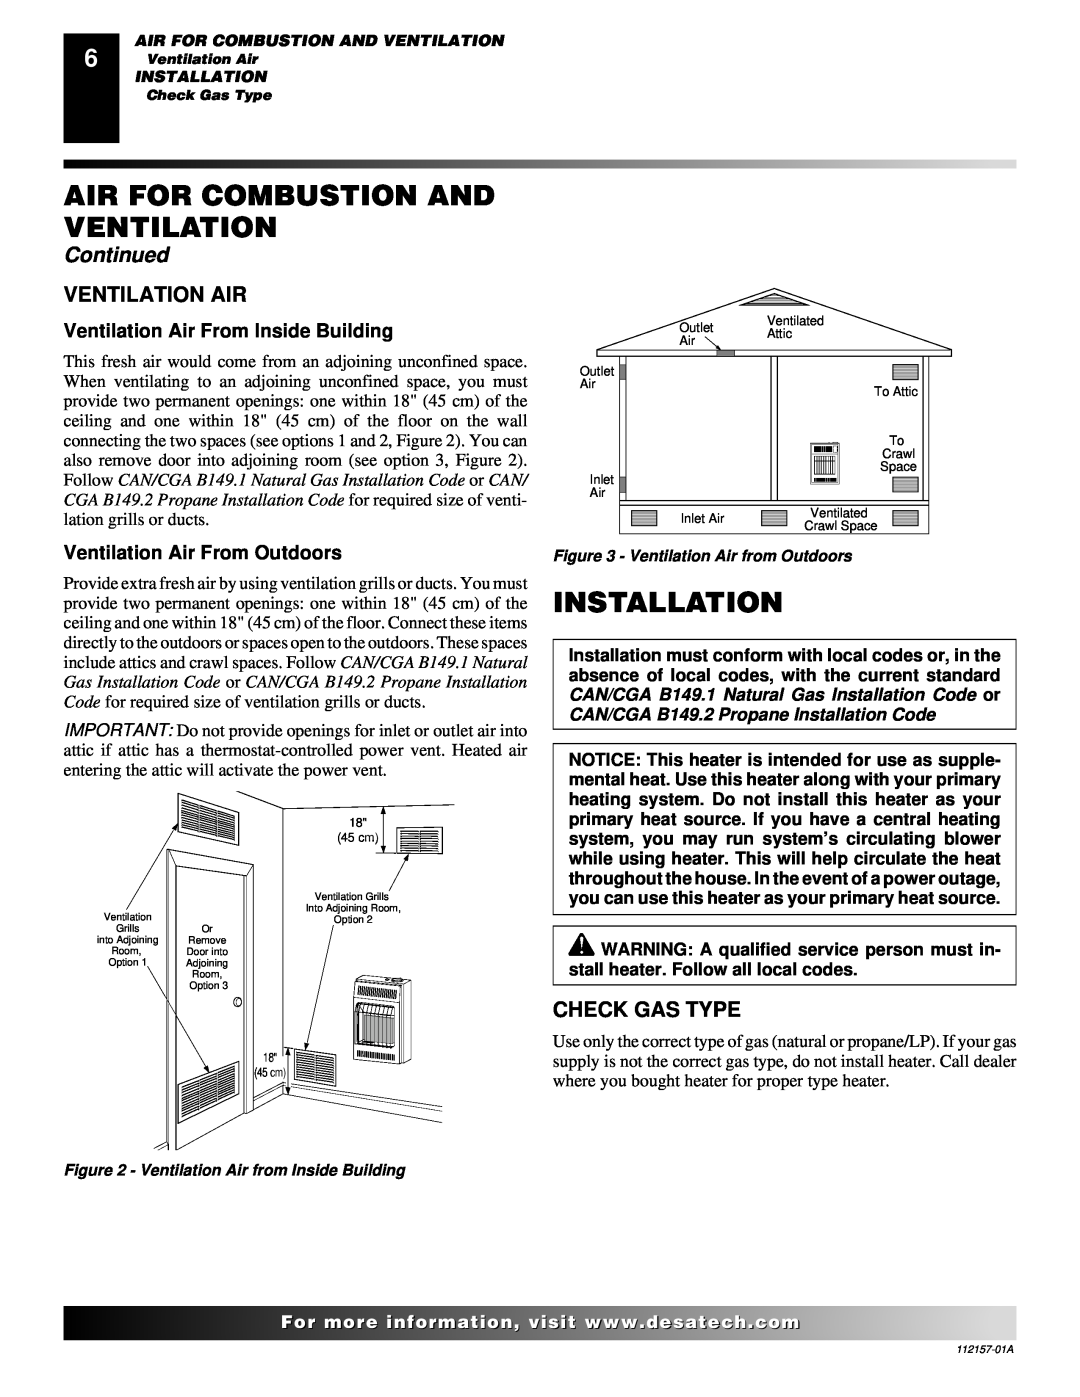 Desa GCN6 Installation, Check Gas Type, Ventilation Air From Inside Building, Ventilation Air From Outdoors, Continued 